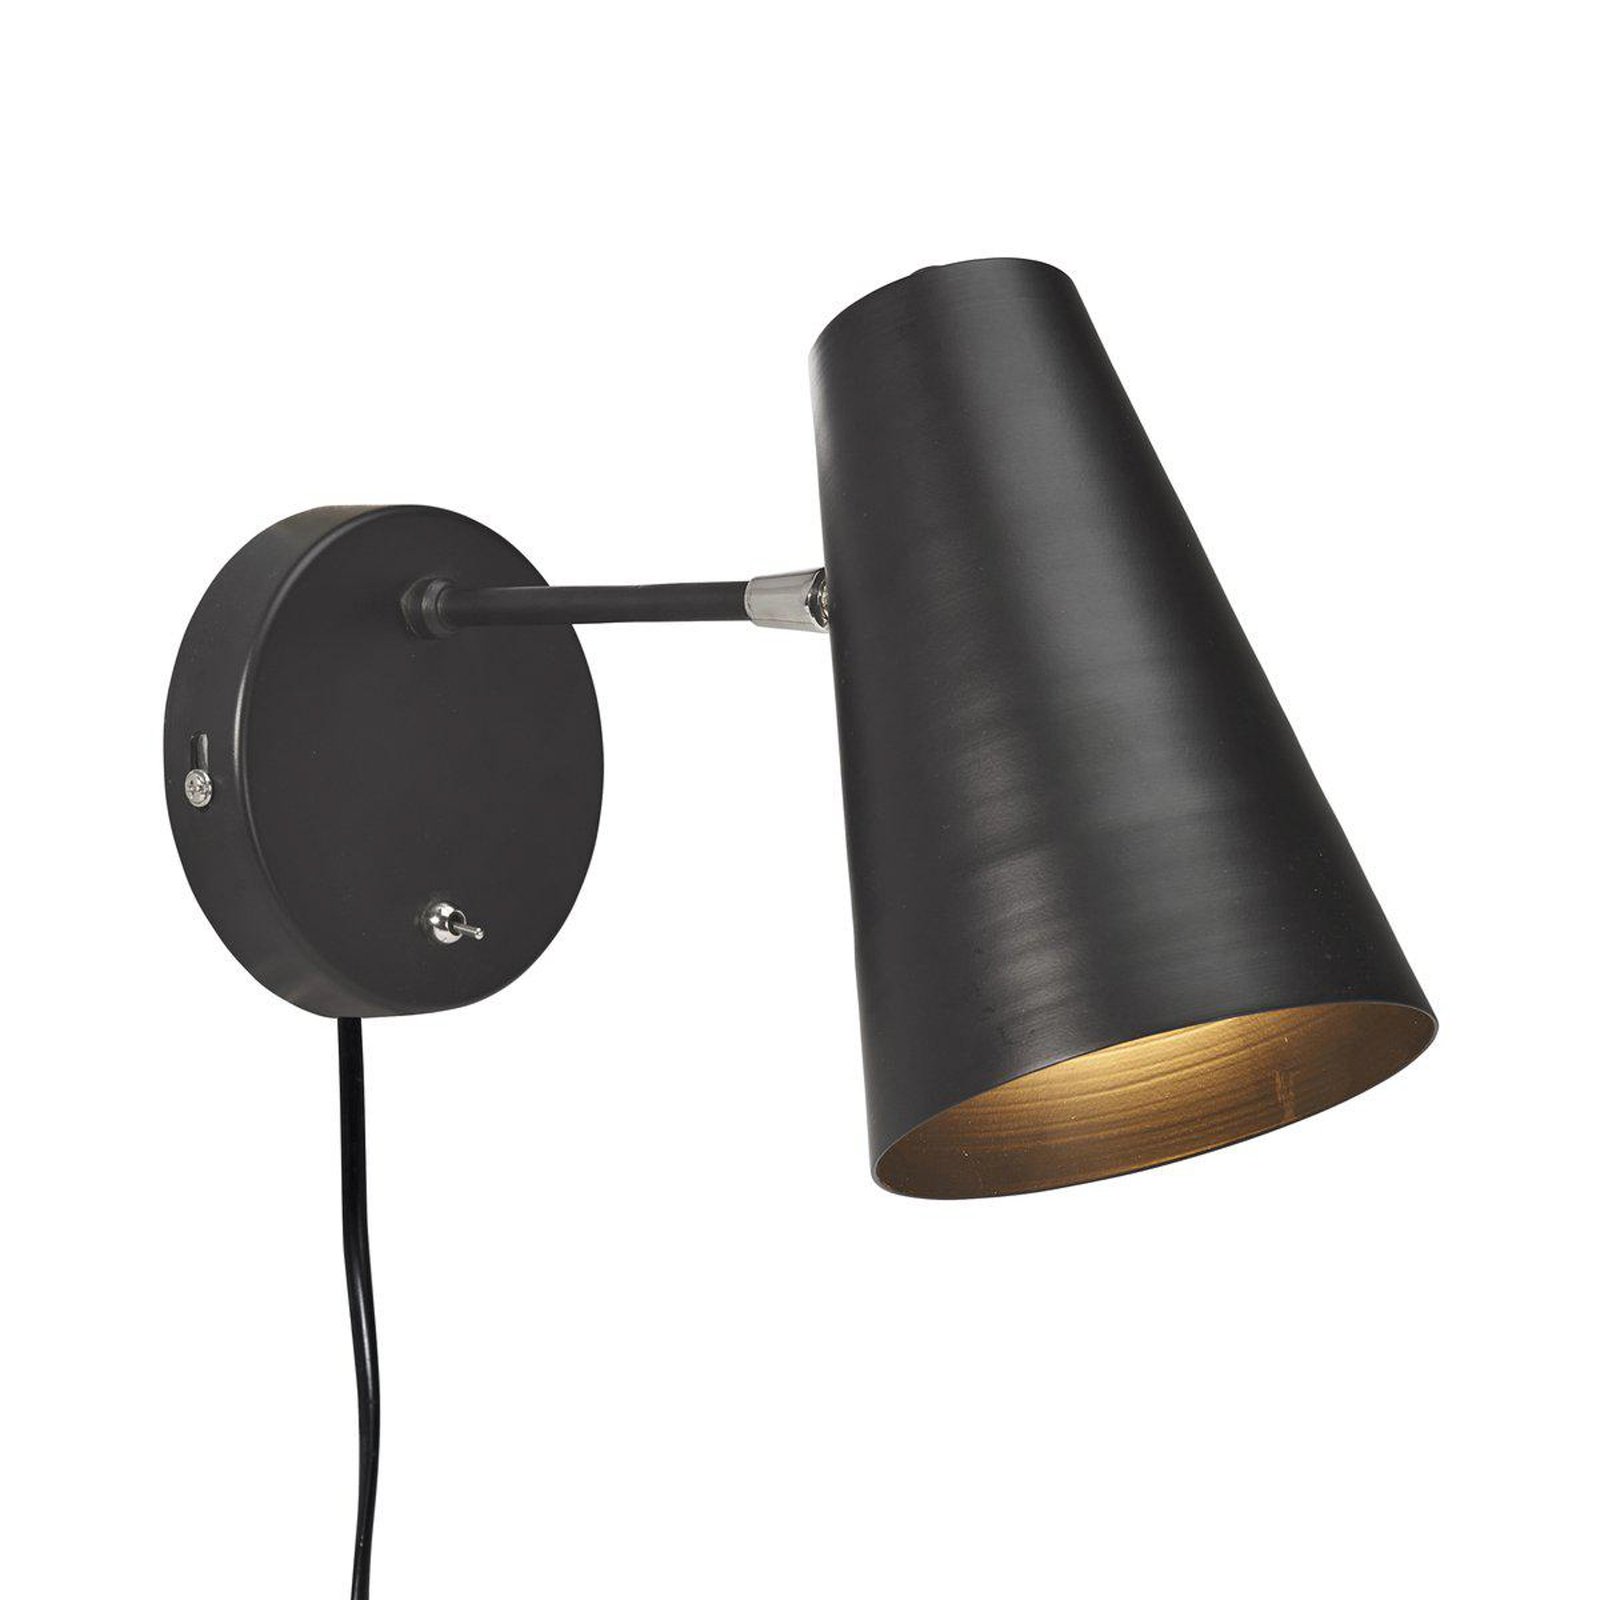 PR Home Cornet wandlamp met stekker, zwart